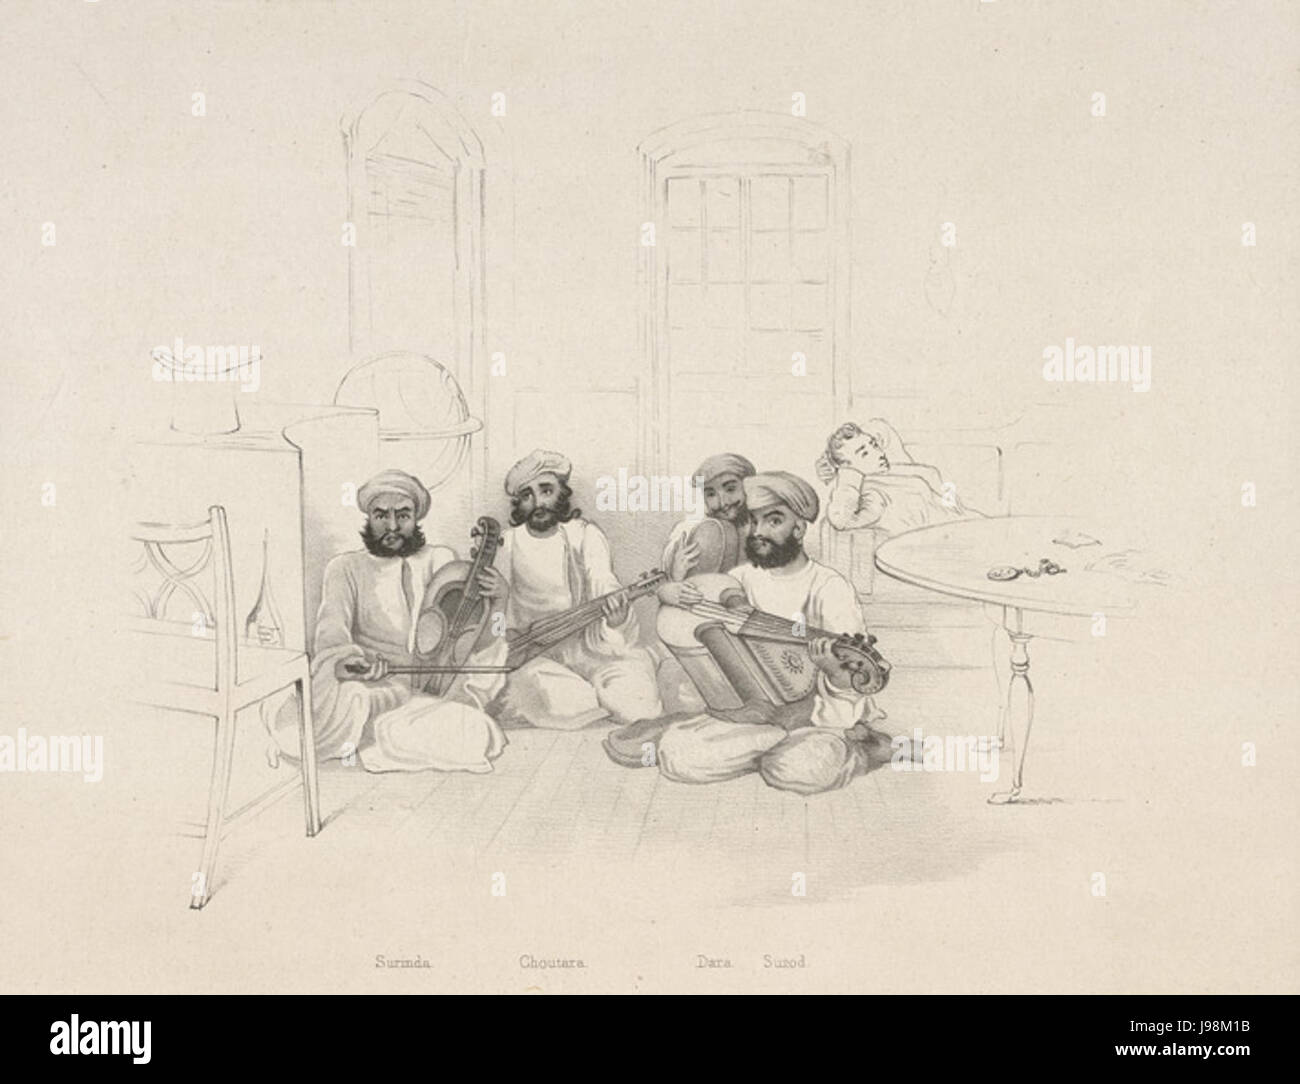 Surinda Choutara Dara Surod la mattina con un concerto tenuto da James Prinsep 1831 Foto Stock